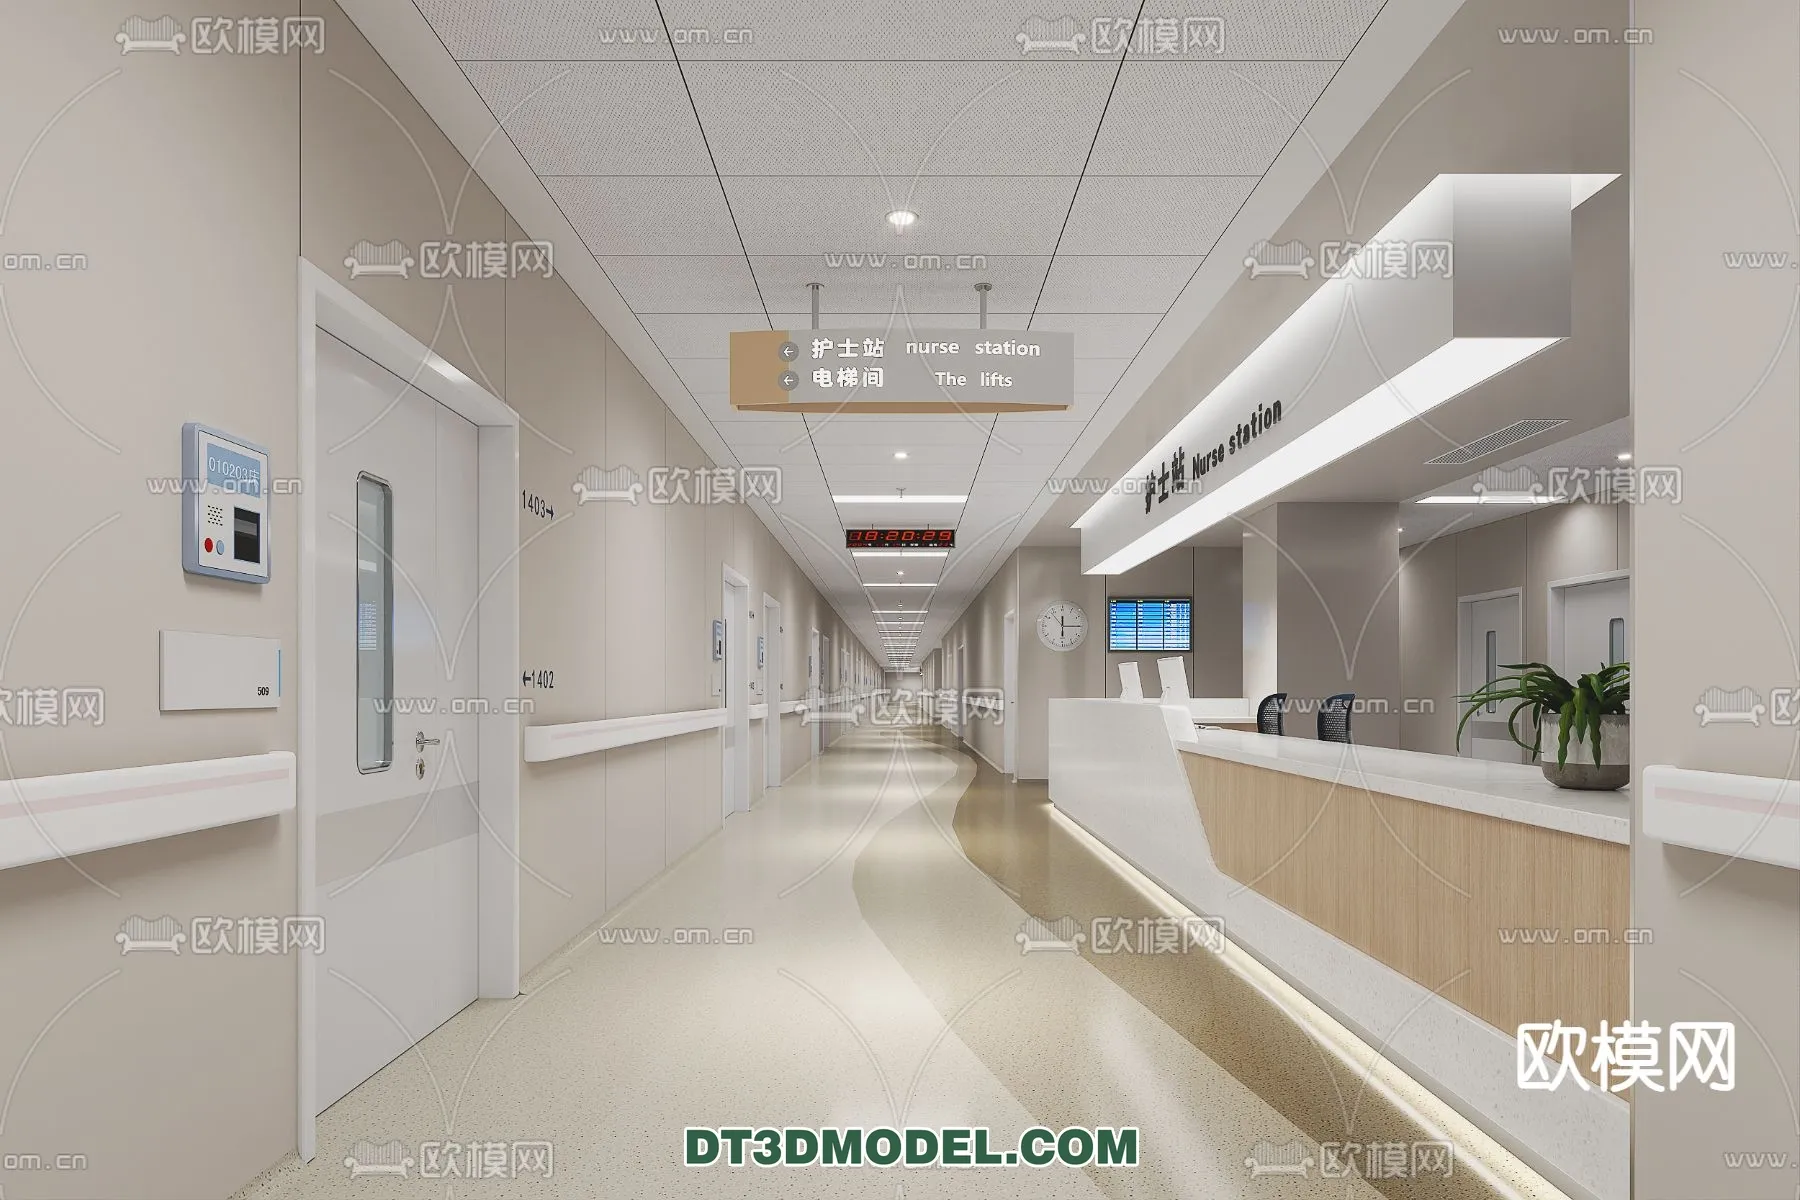 HOSPITAL 3D SCENES – MODERN – 0157